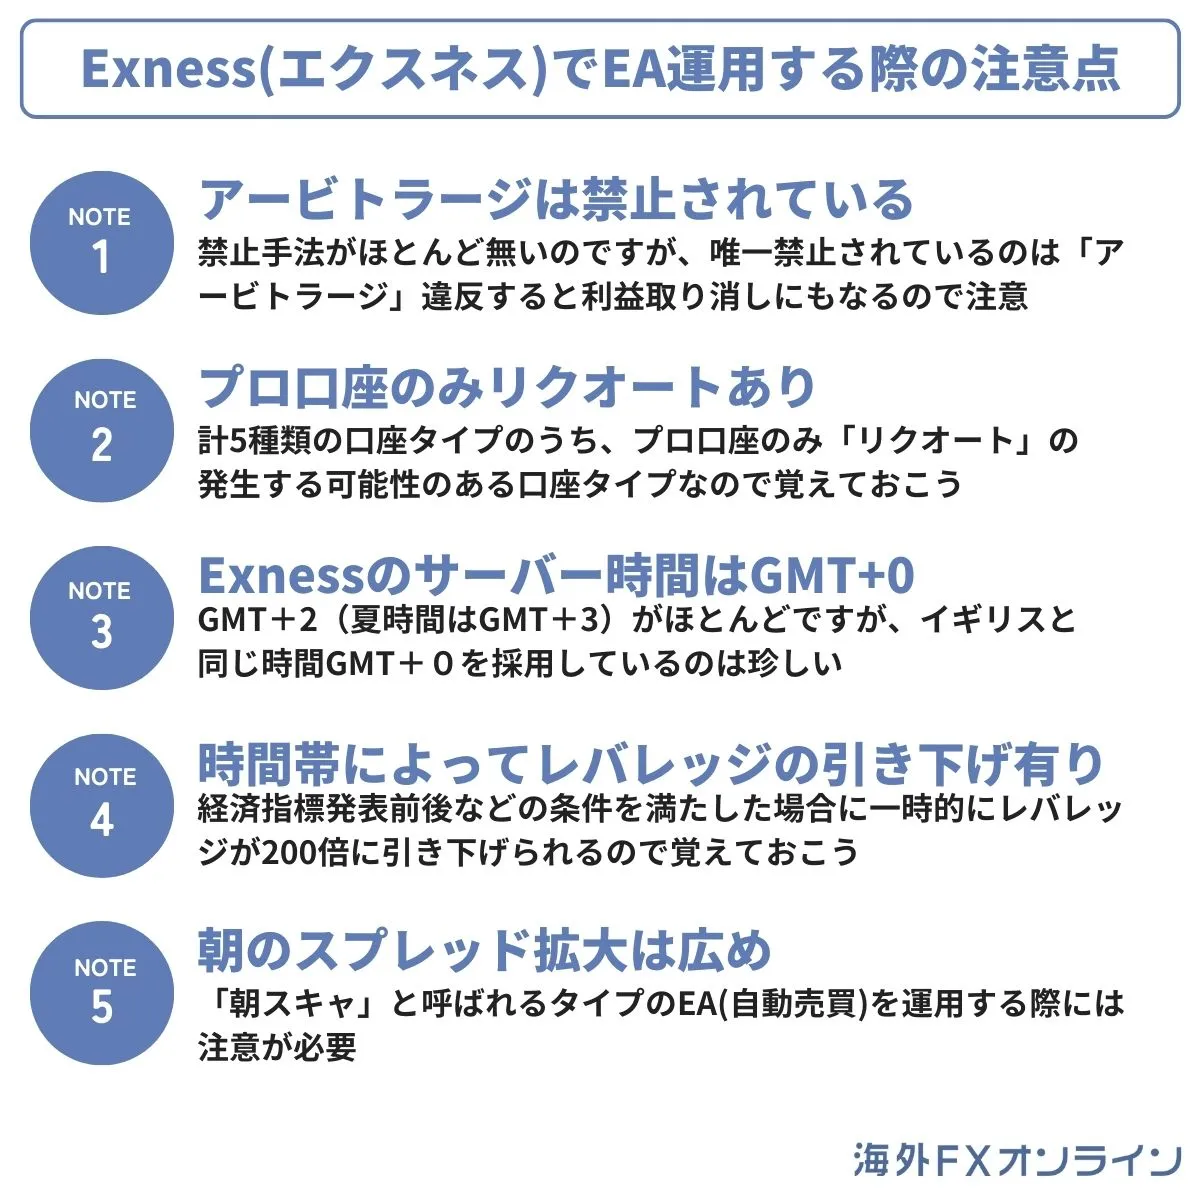 Exness(エクスネス)でEA運用する際の注意点